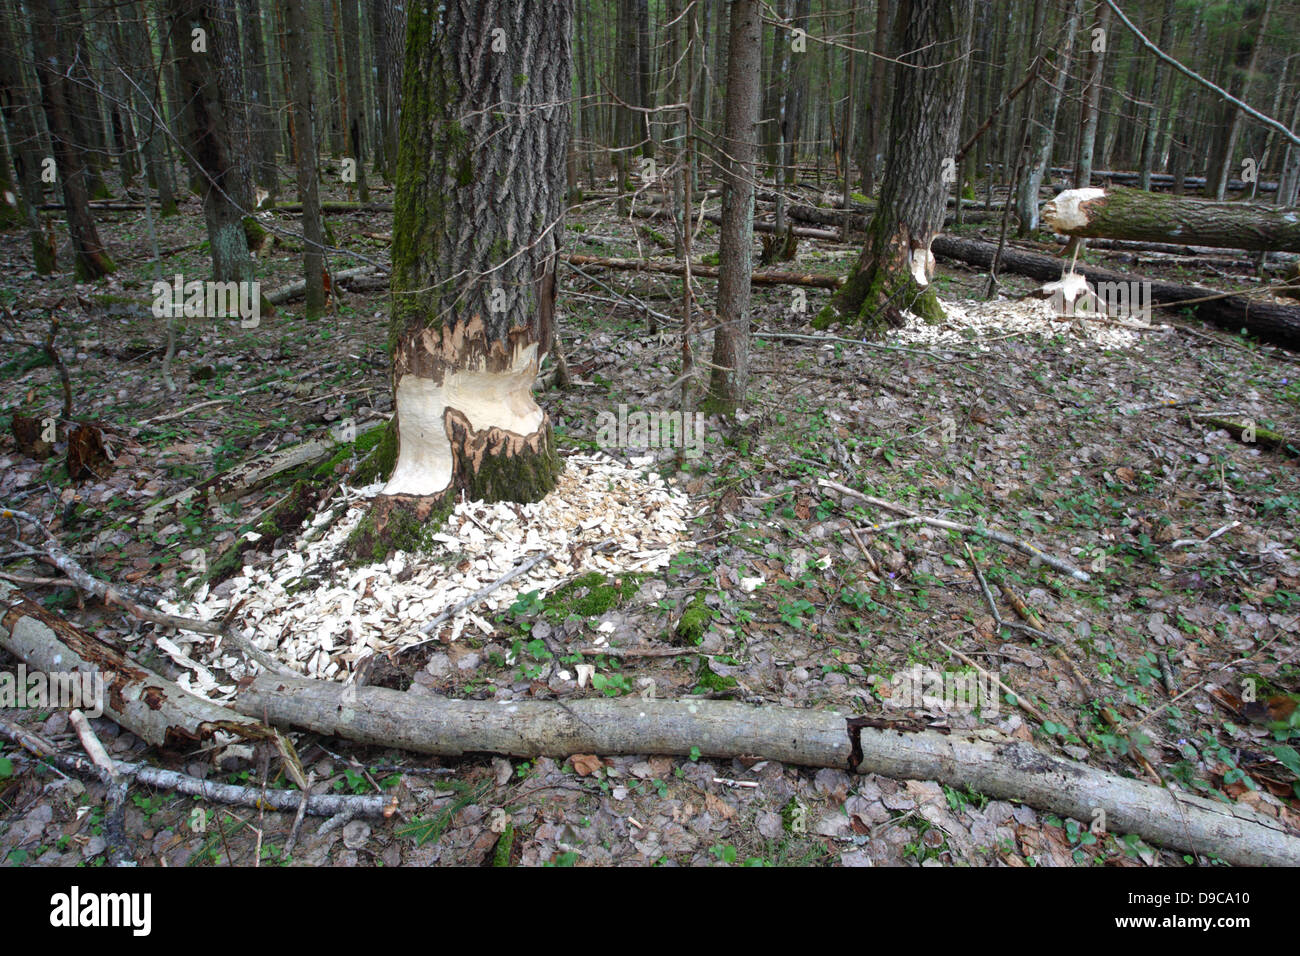 Beaver (Castor fiber) damaged trees in the forest, Estonia, Europe Stock Photo